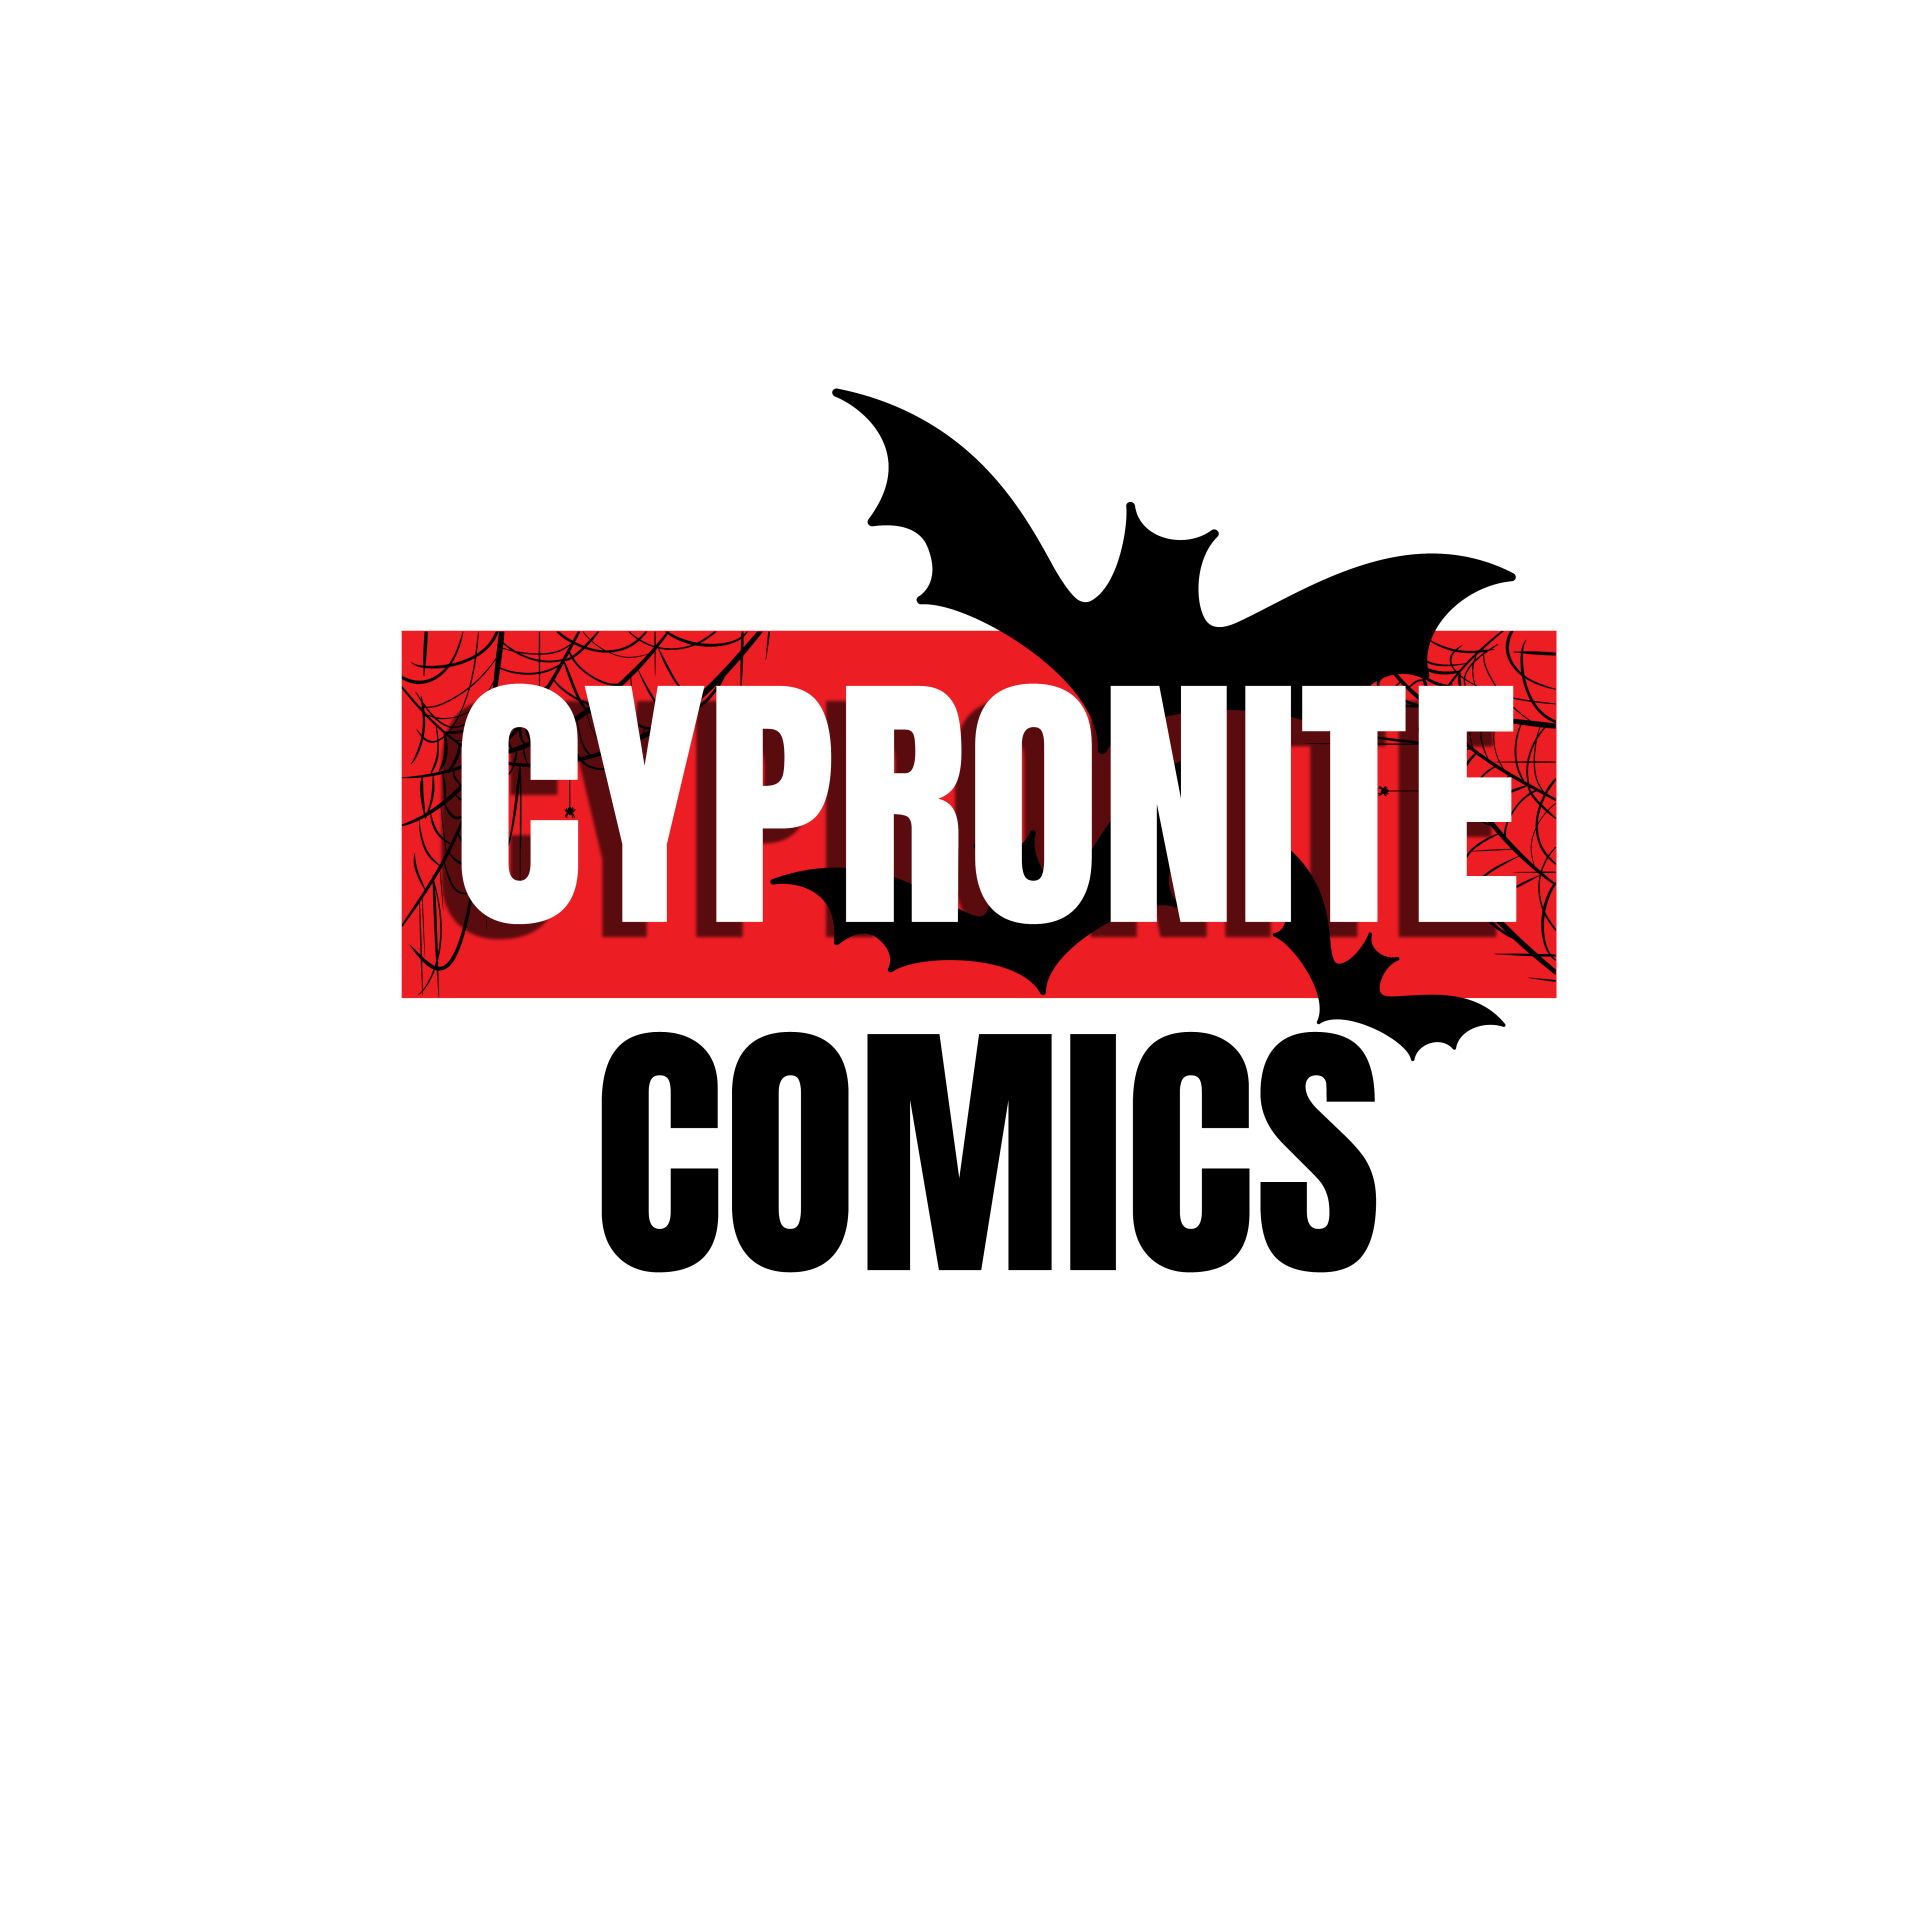 Cypronite